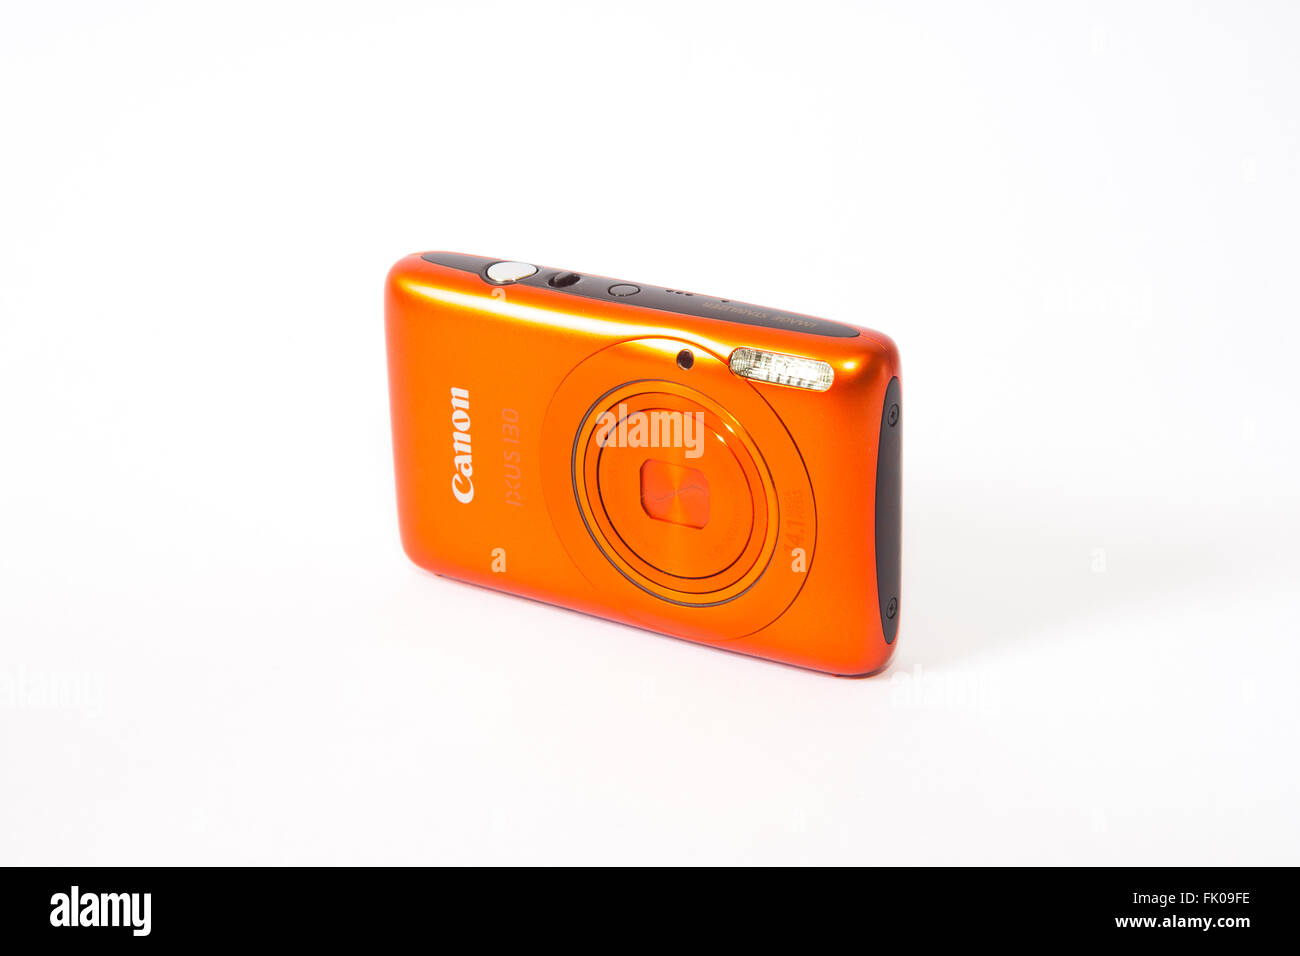 Canon Ixus 130 in orange compact camera turned off. Stock Photo